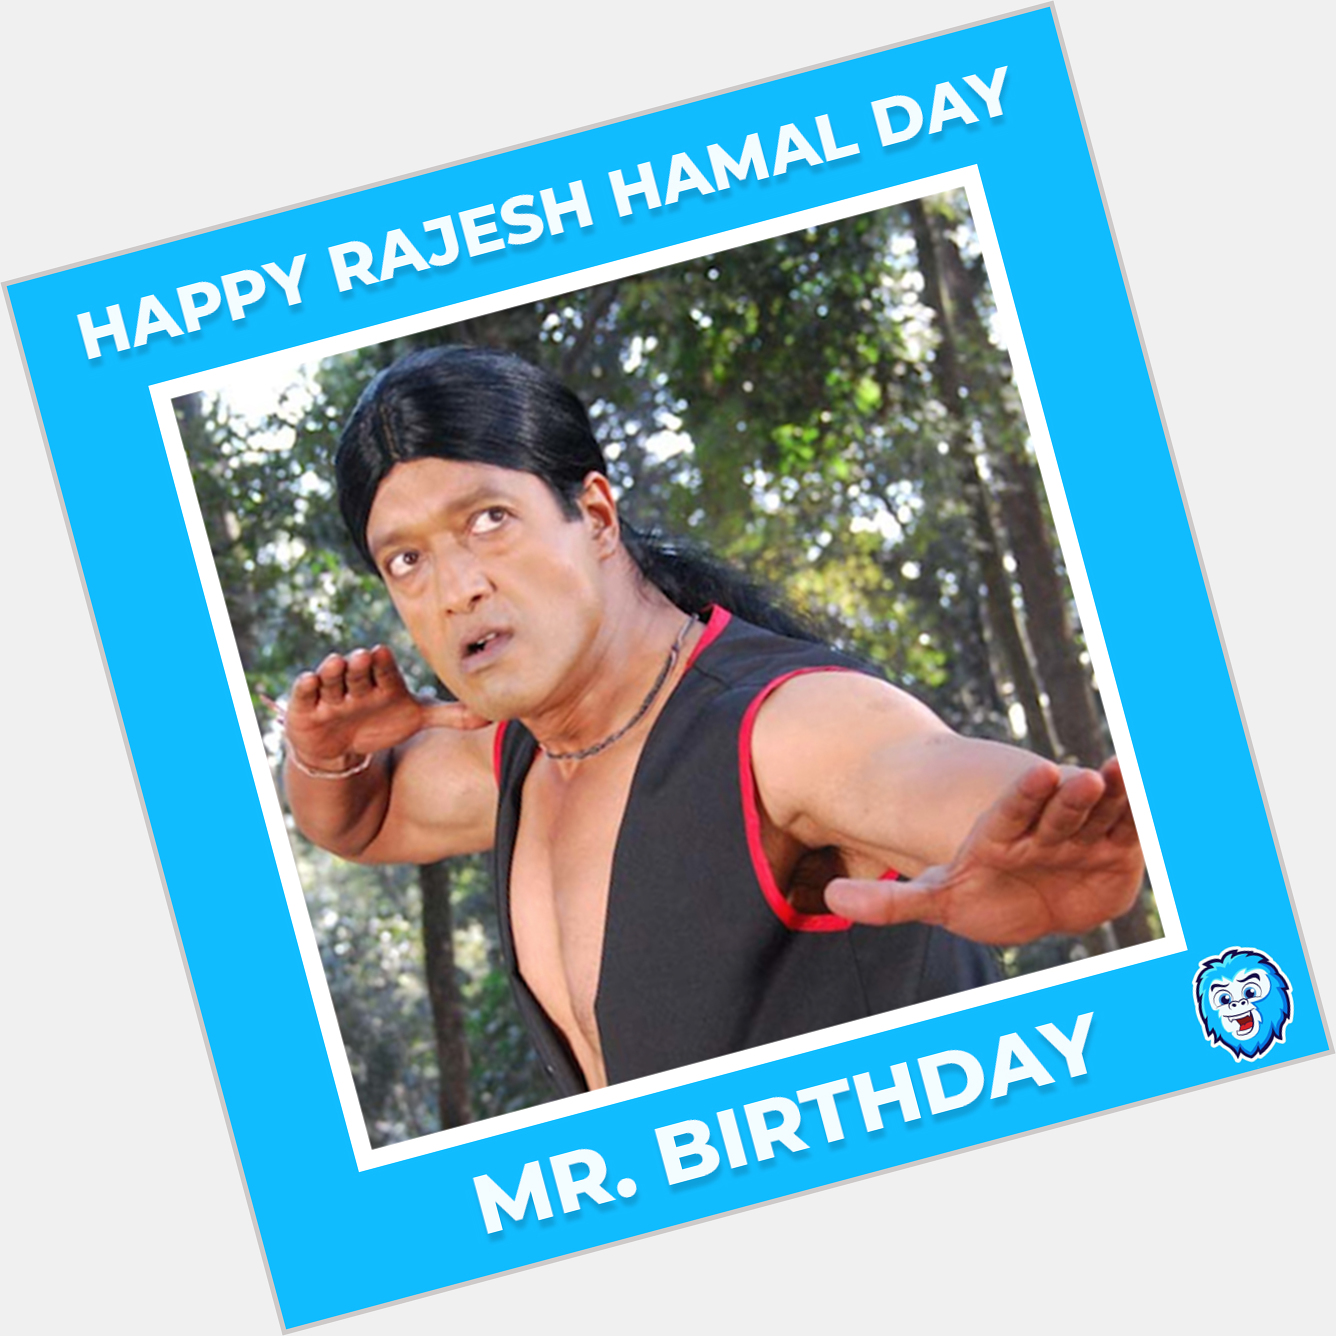 Happy Rajesh Hamal Day, Mr. Birthday!   